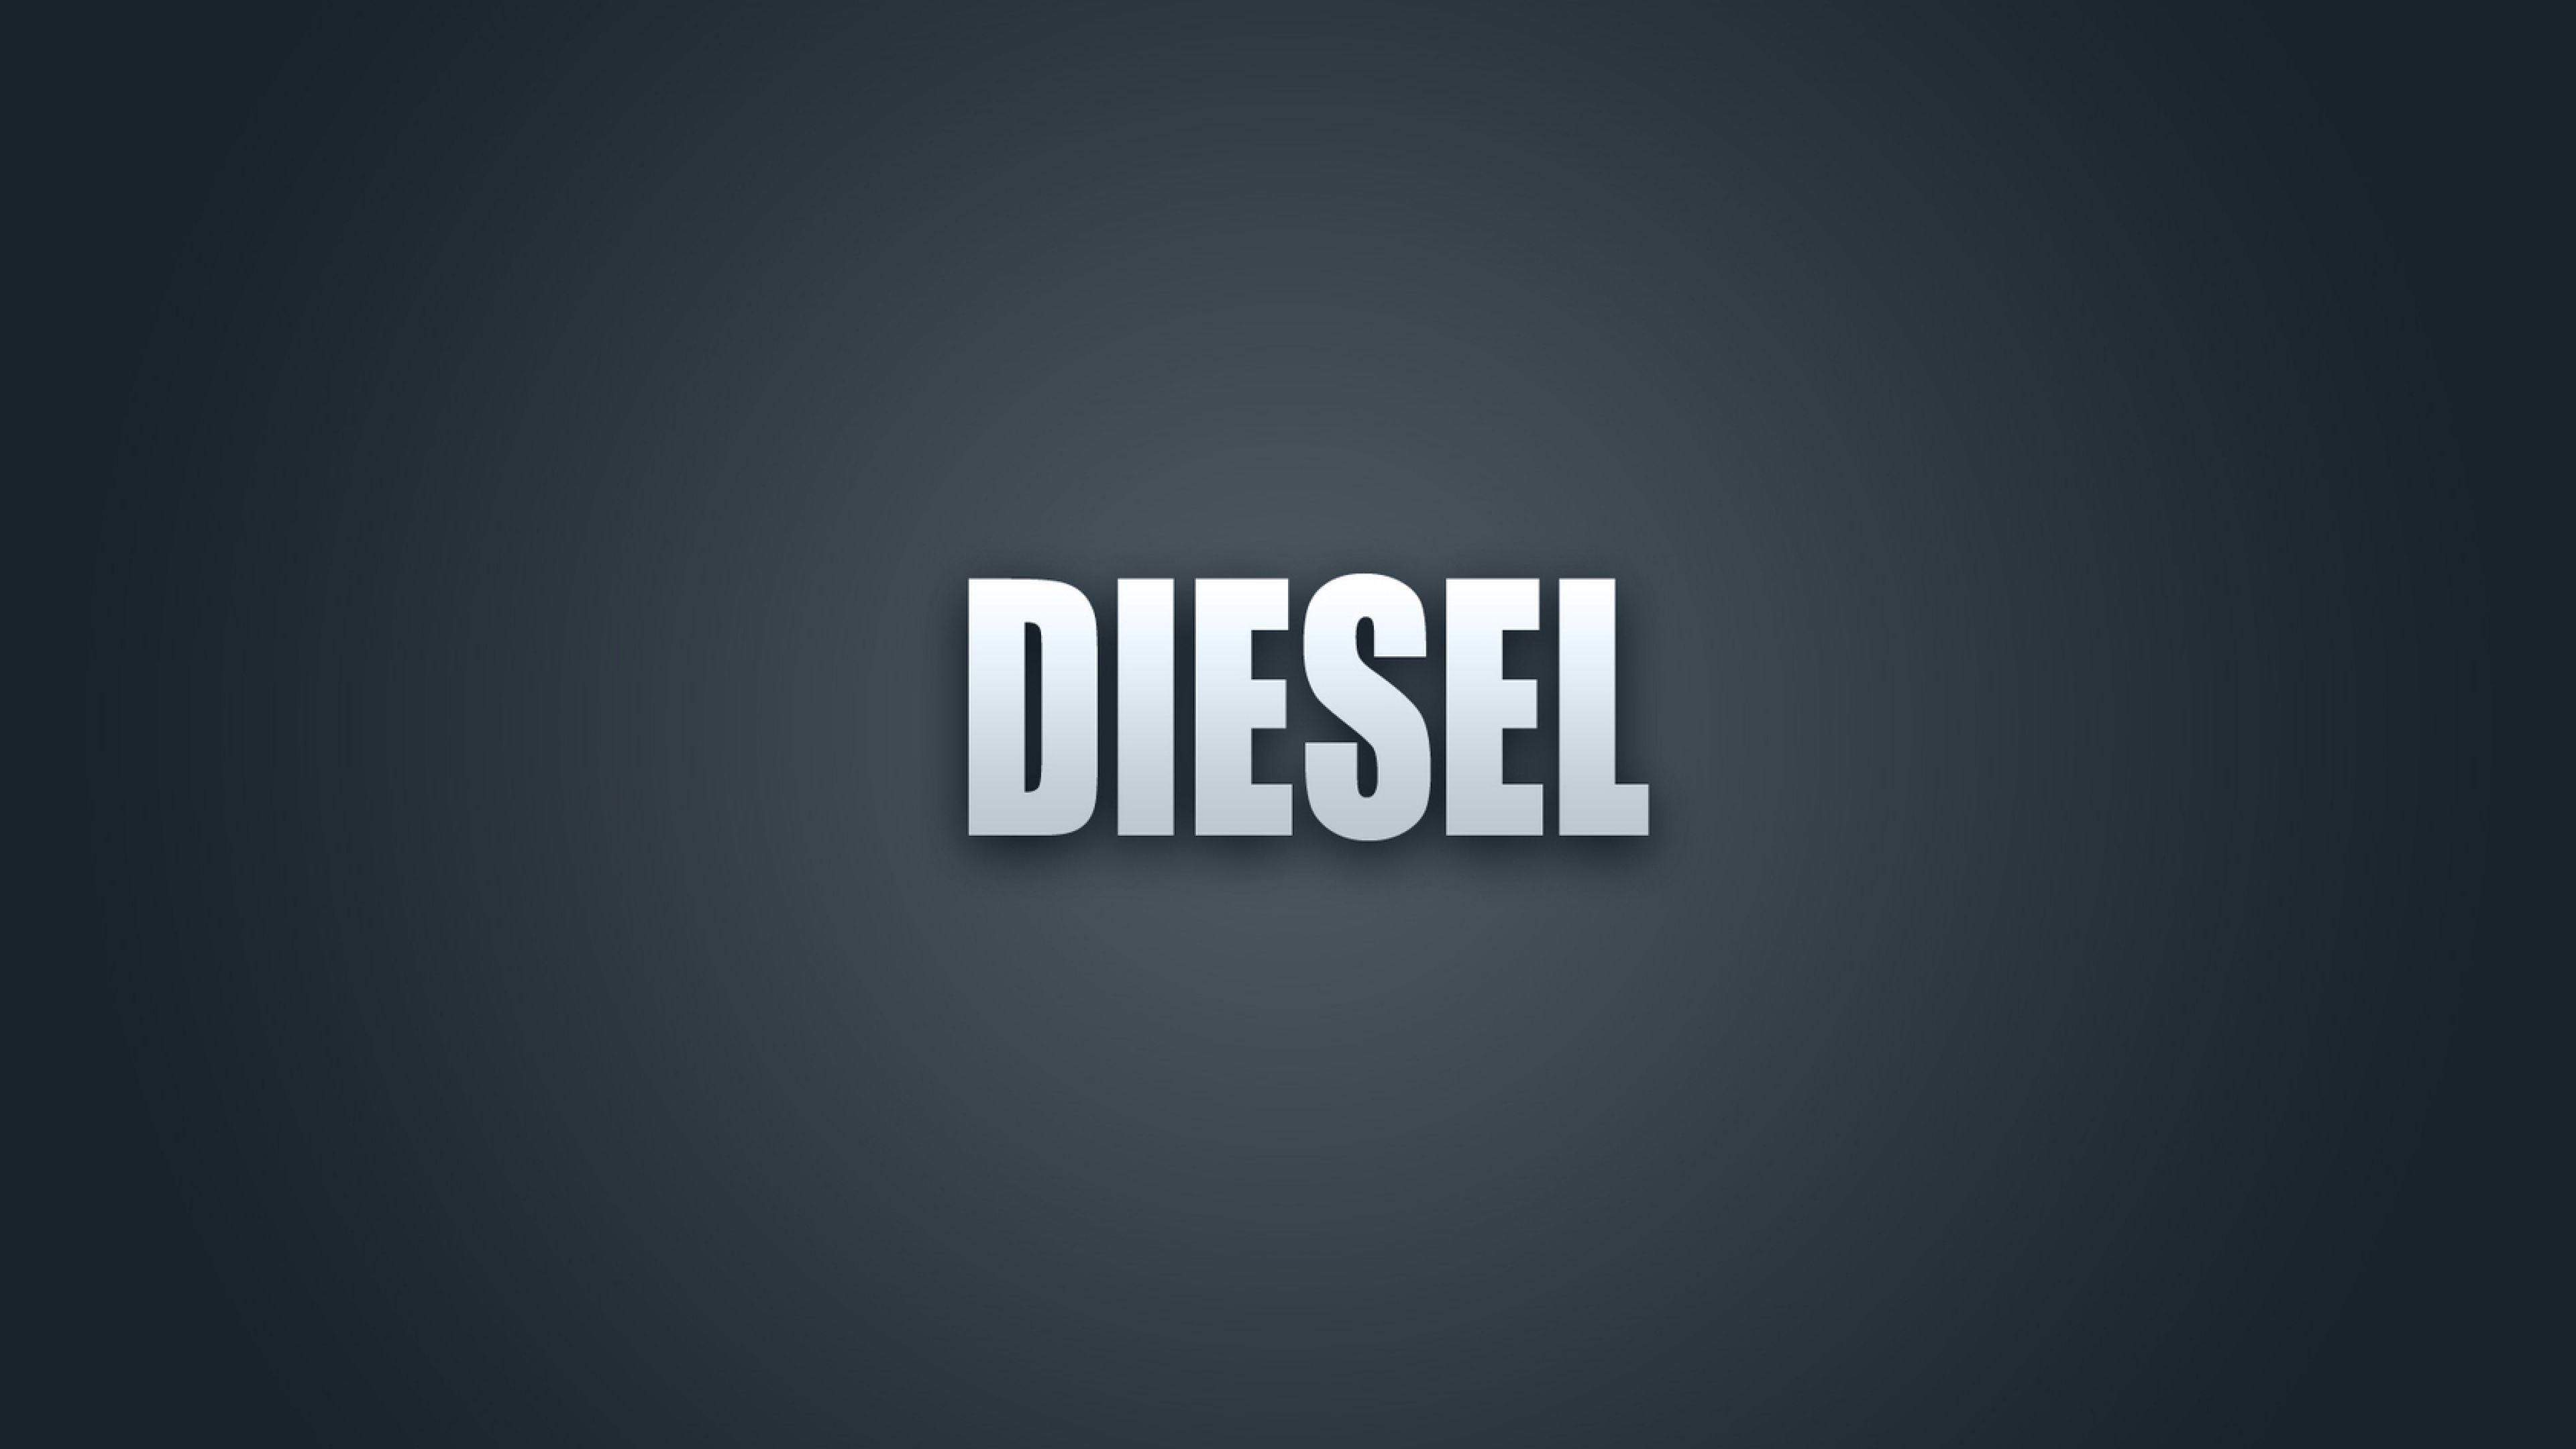 Логотип дизель. Эмблема дизель. Дизель логотип бренда. Diesel надпись. Diesel одежда логотип.